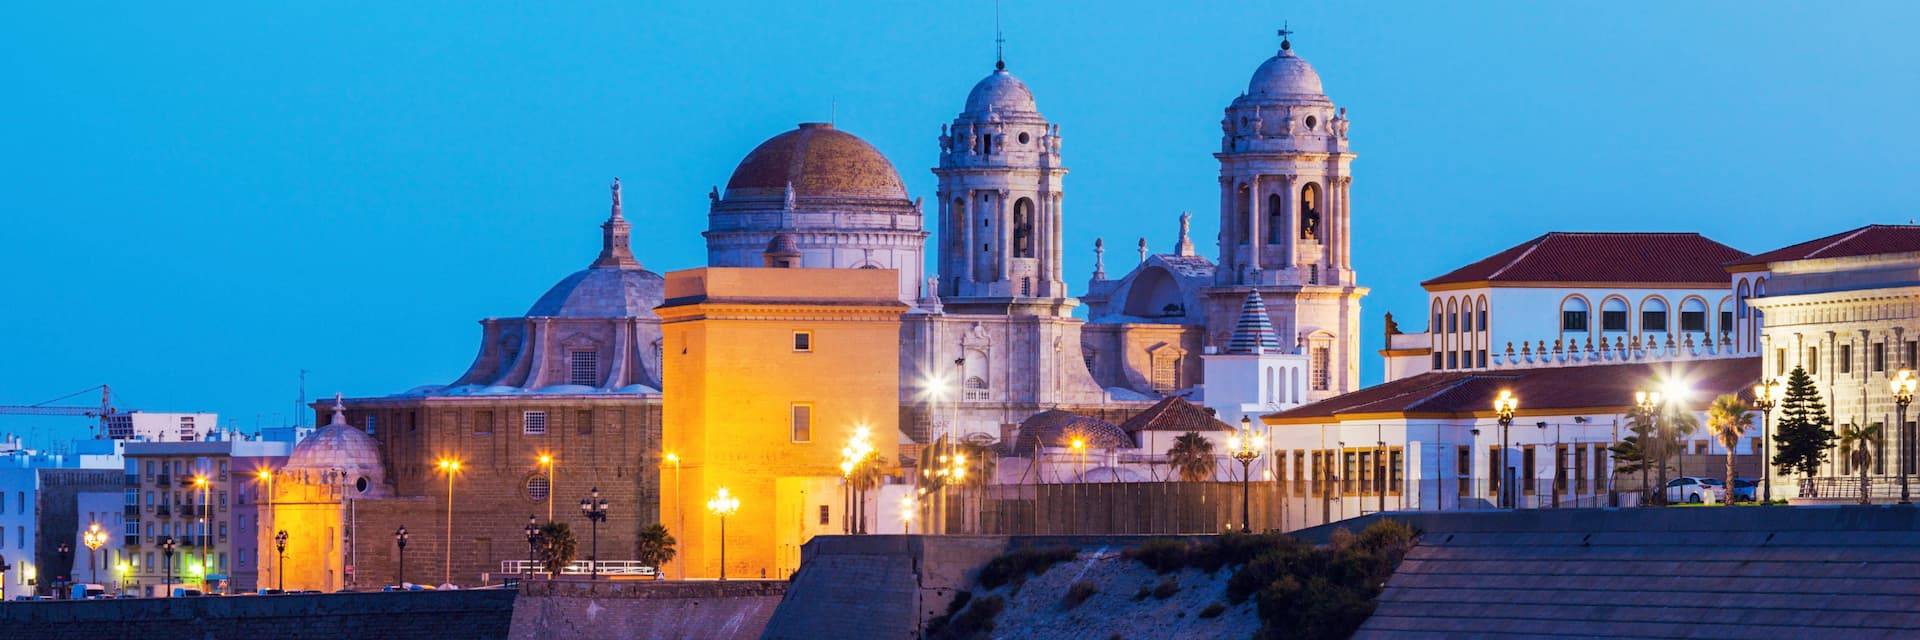 Free Tour Leyendas y Misterios de Cádiz